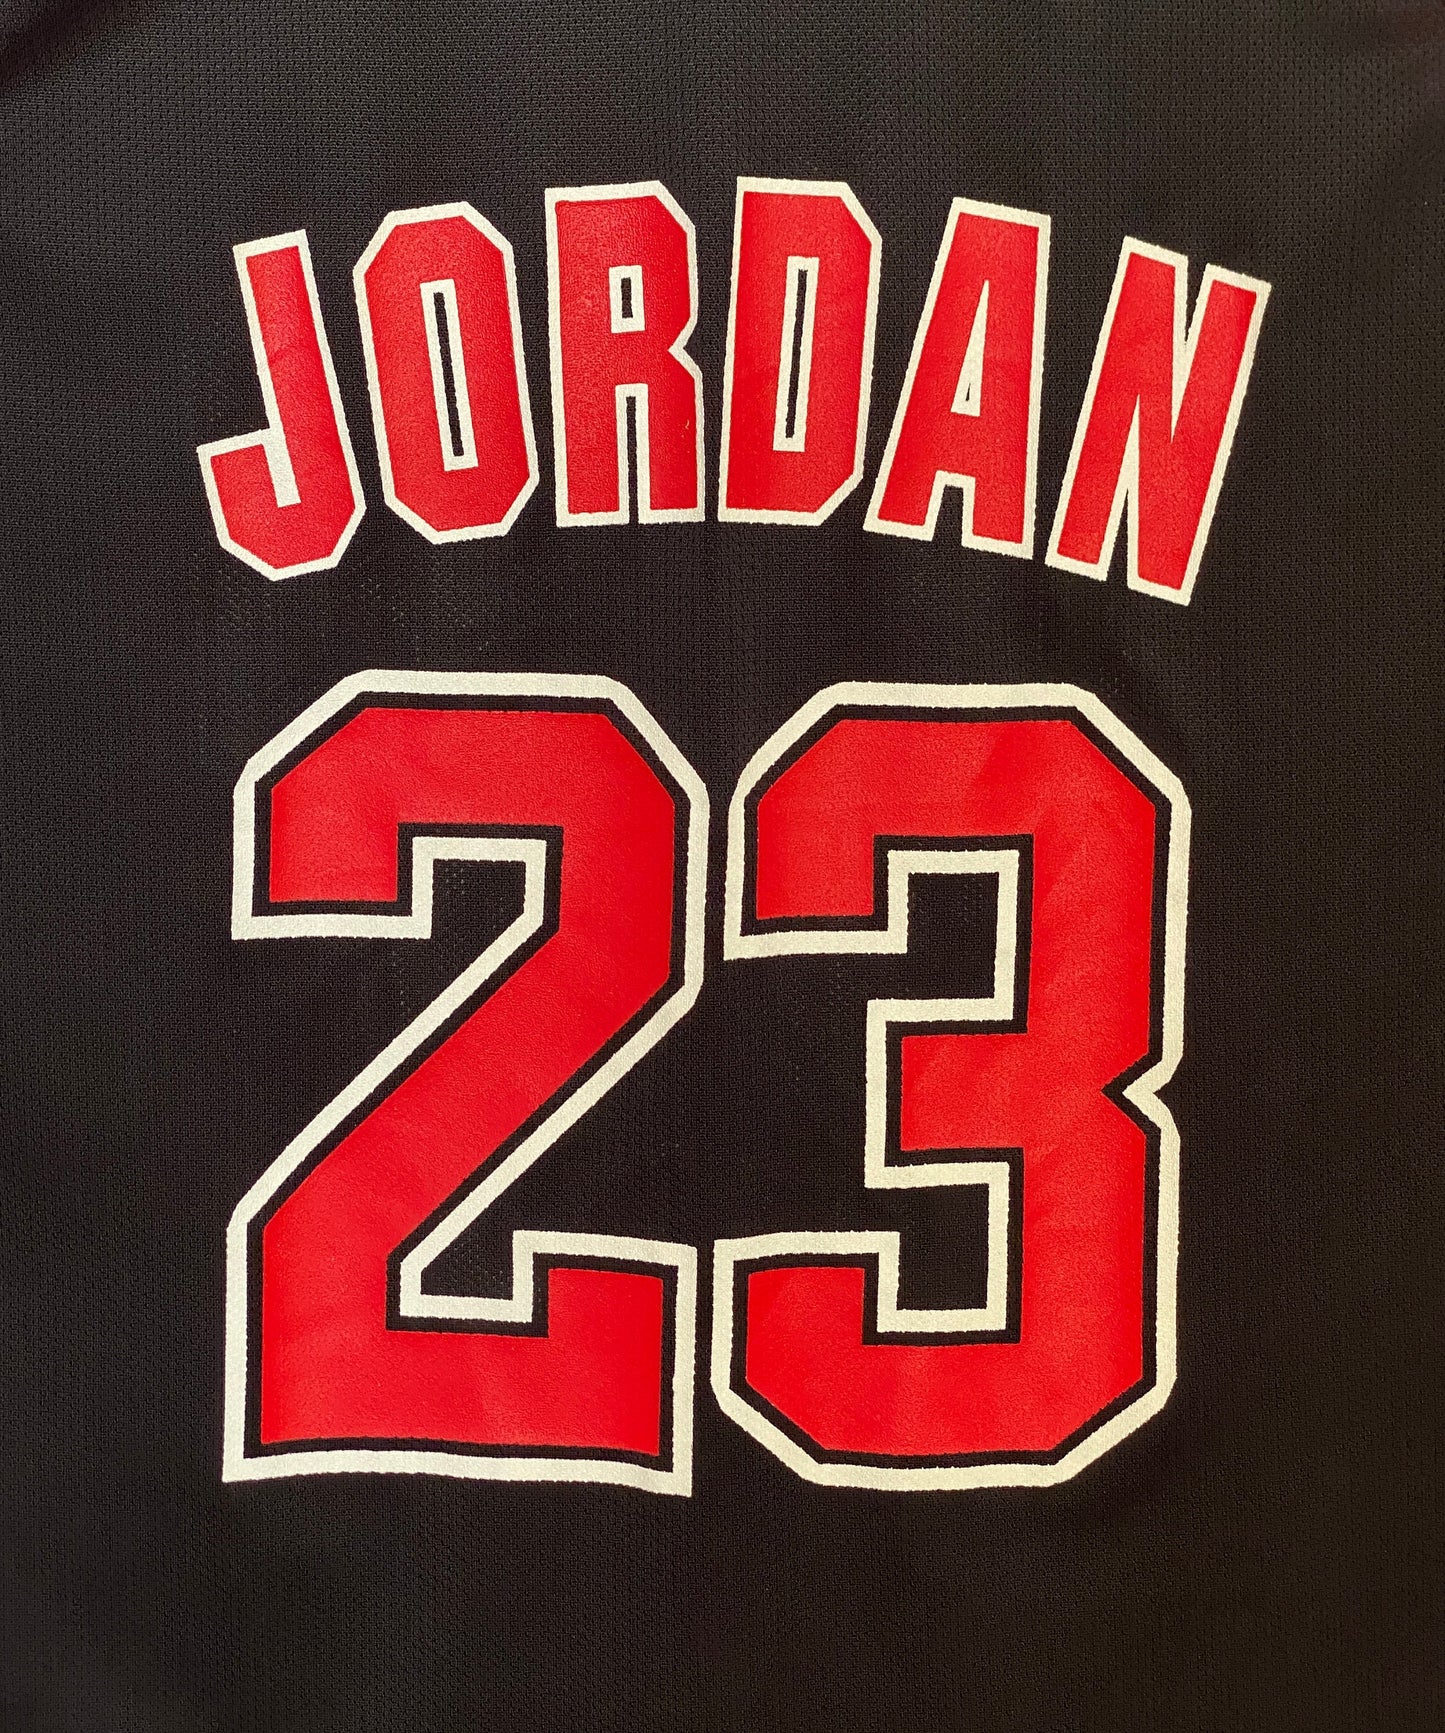 Size 52. 90s Vintage Chicago Bulls Michael Jordan #23 NBA jersey